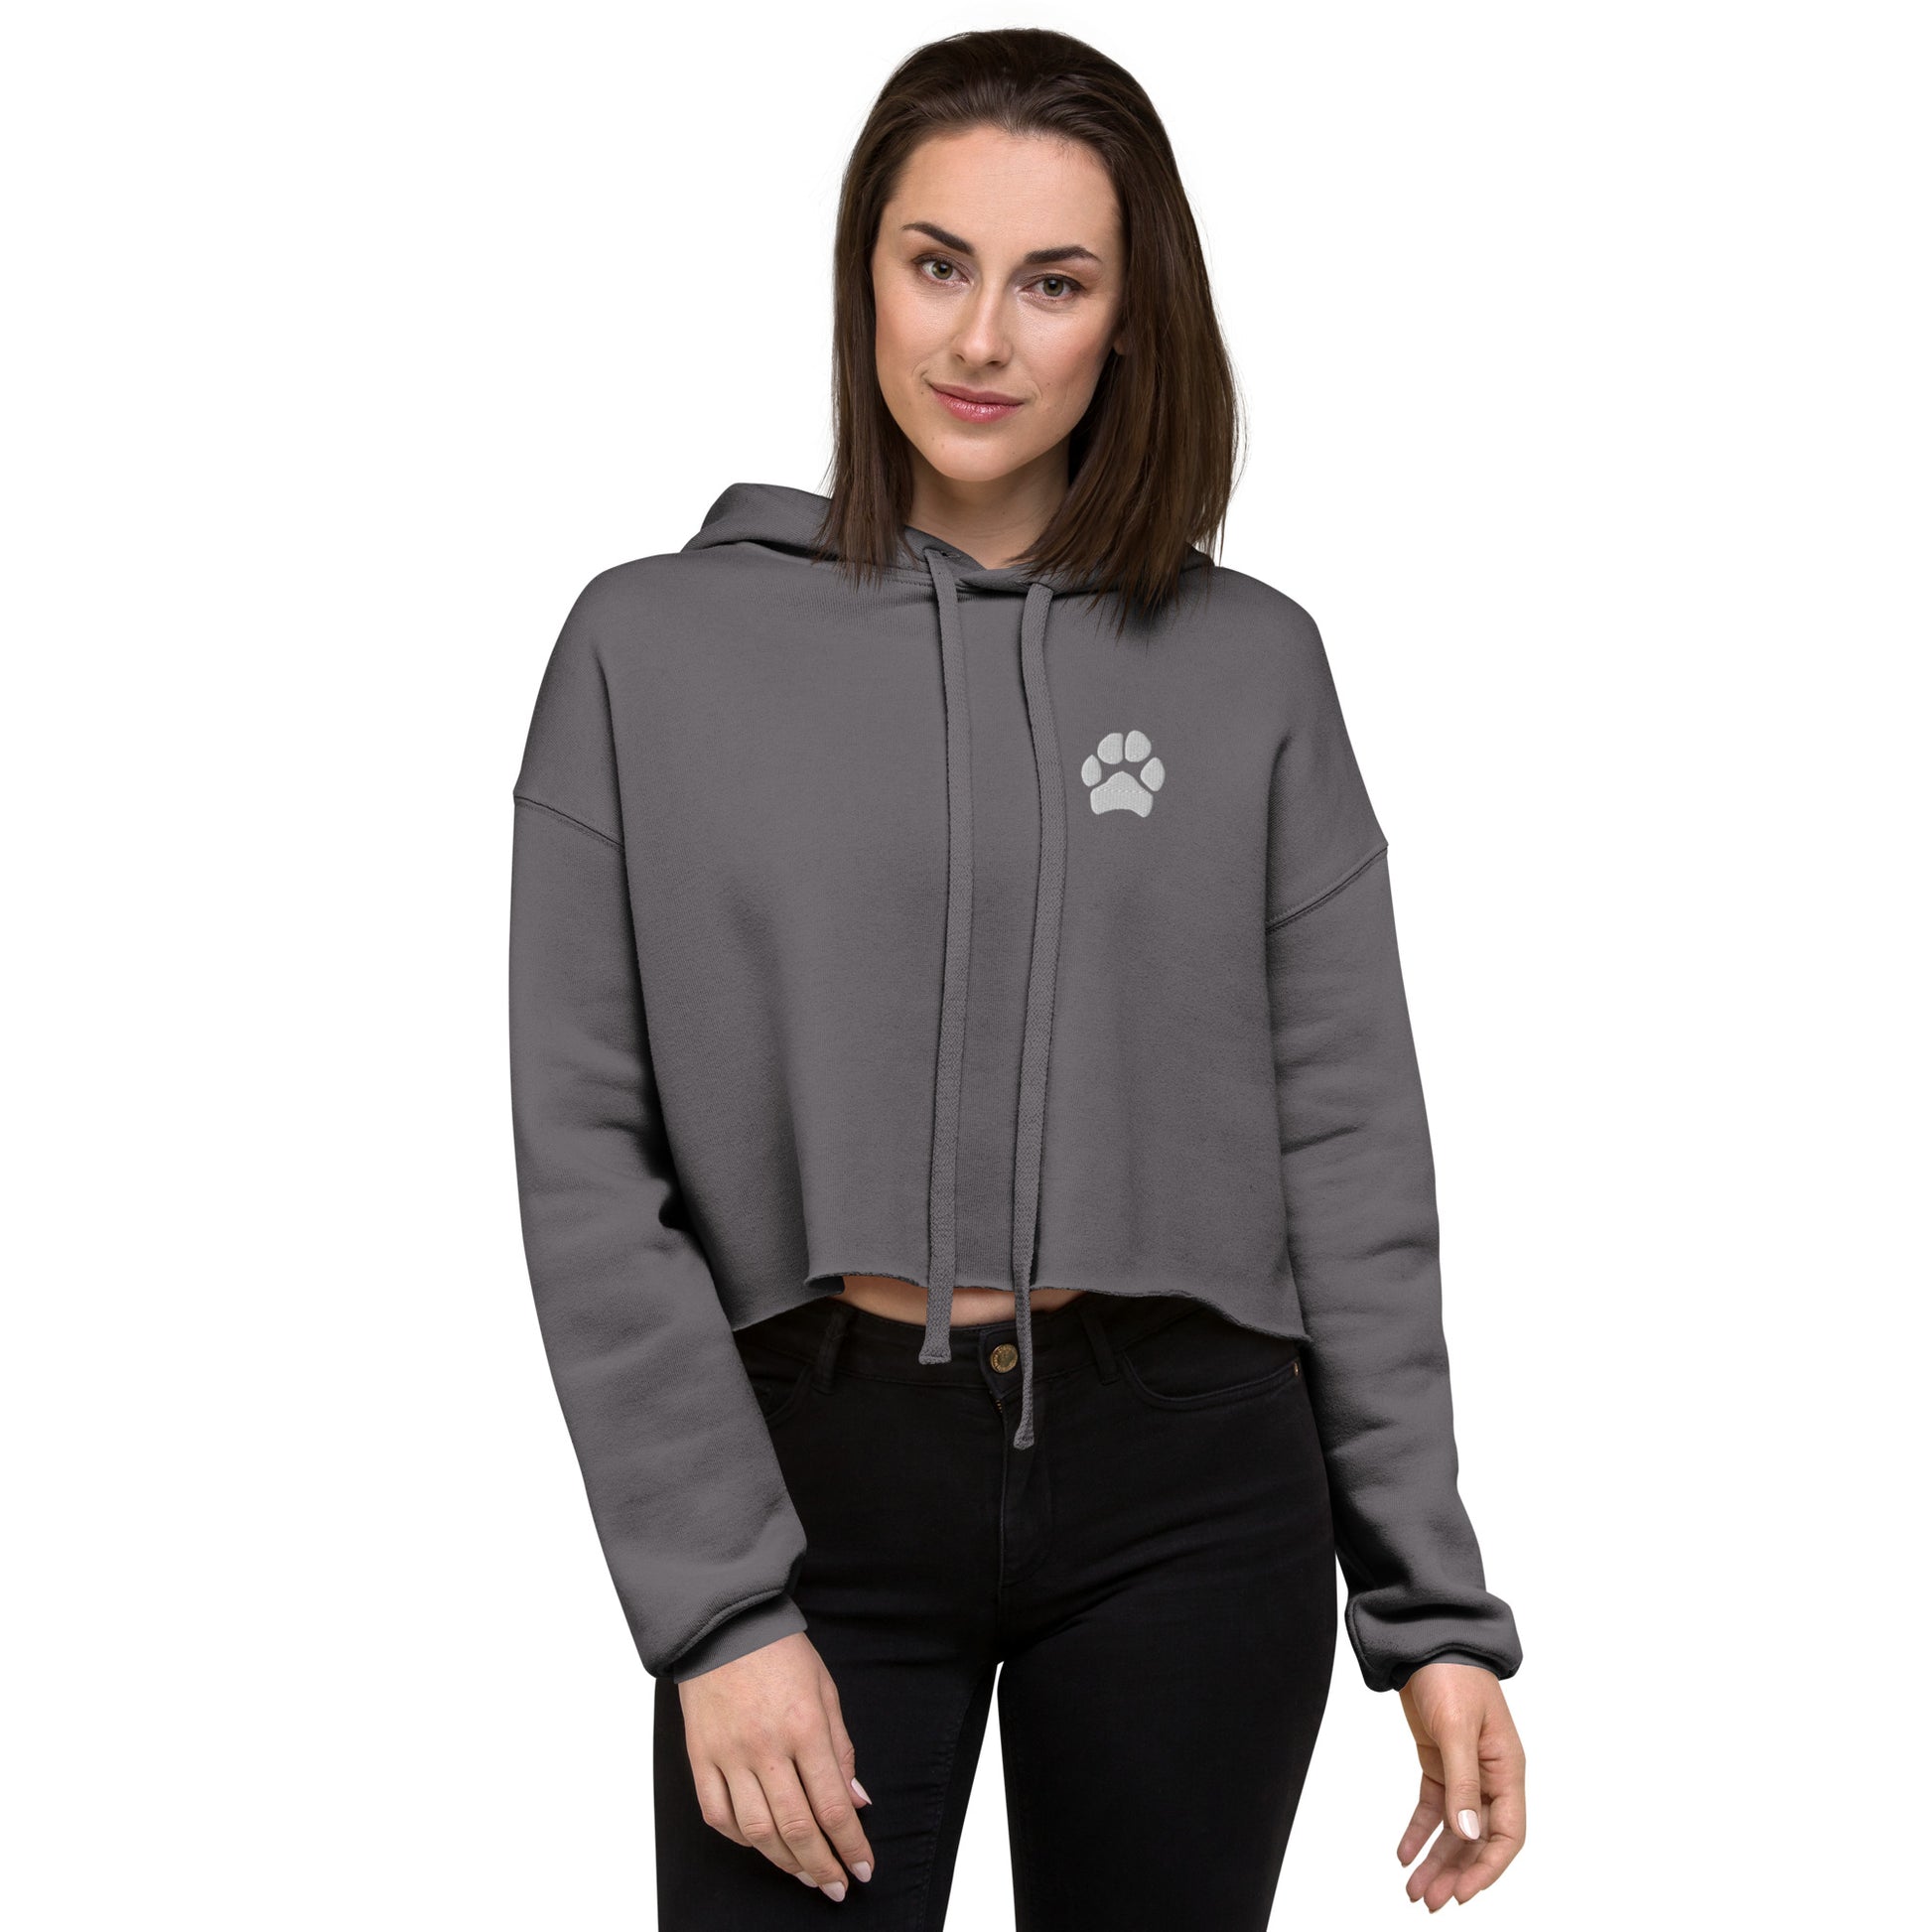 Pawprint hoodie, cropped hoodie, personalized sweatshirt, tailgate clothes, customized sweatshirt